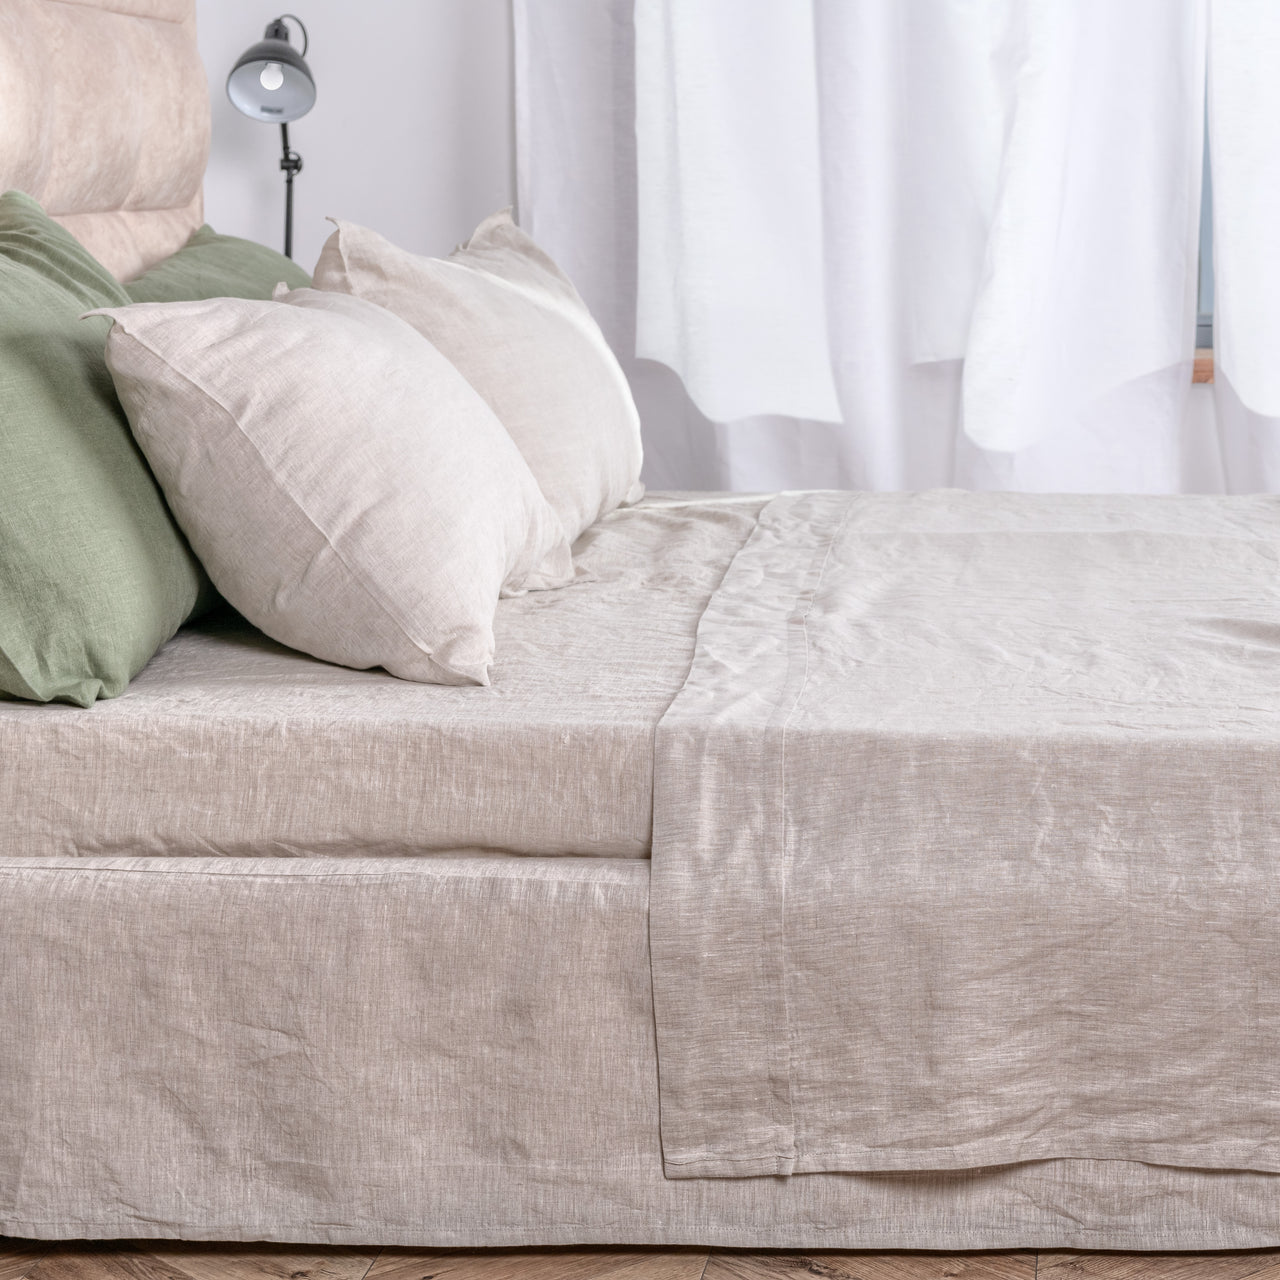 Natural Linen Bed Sheets 